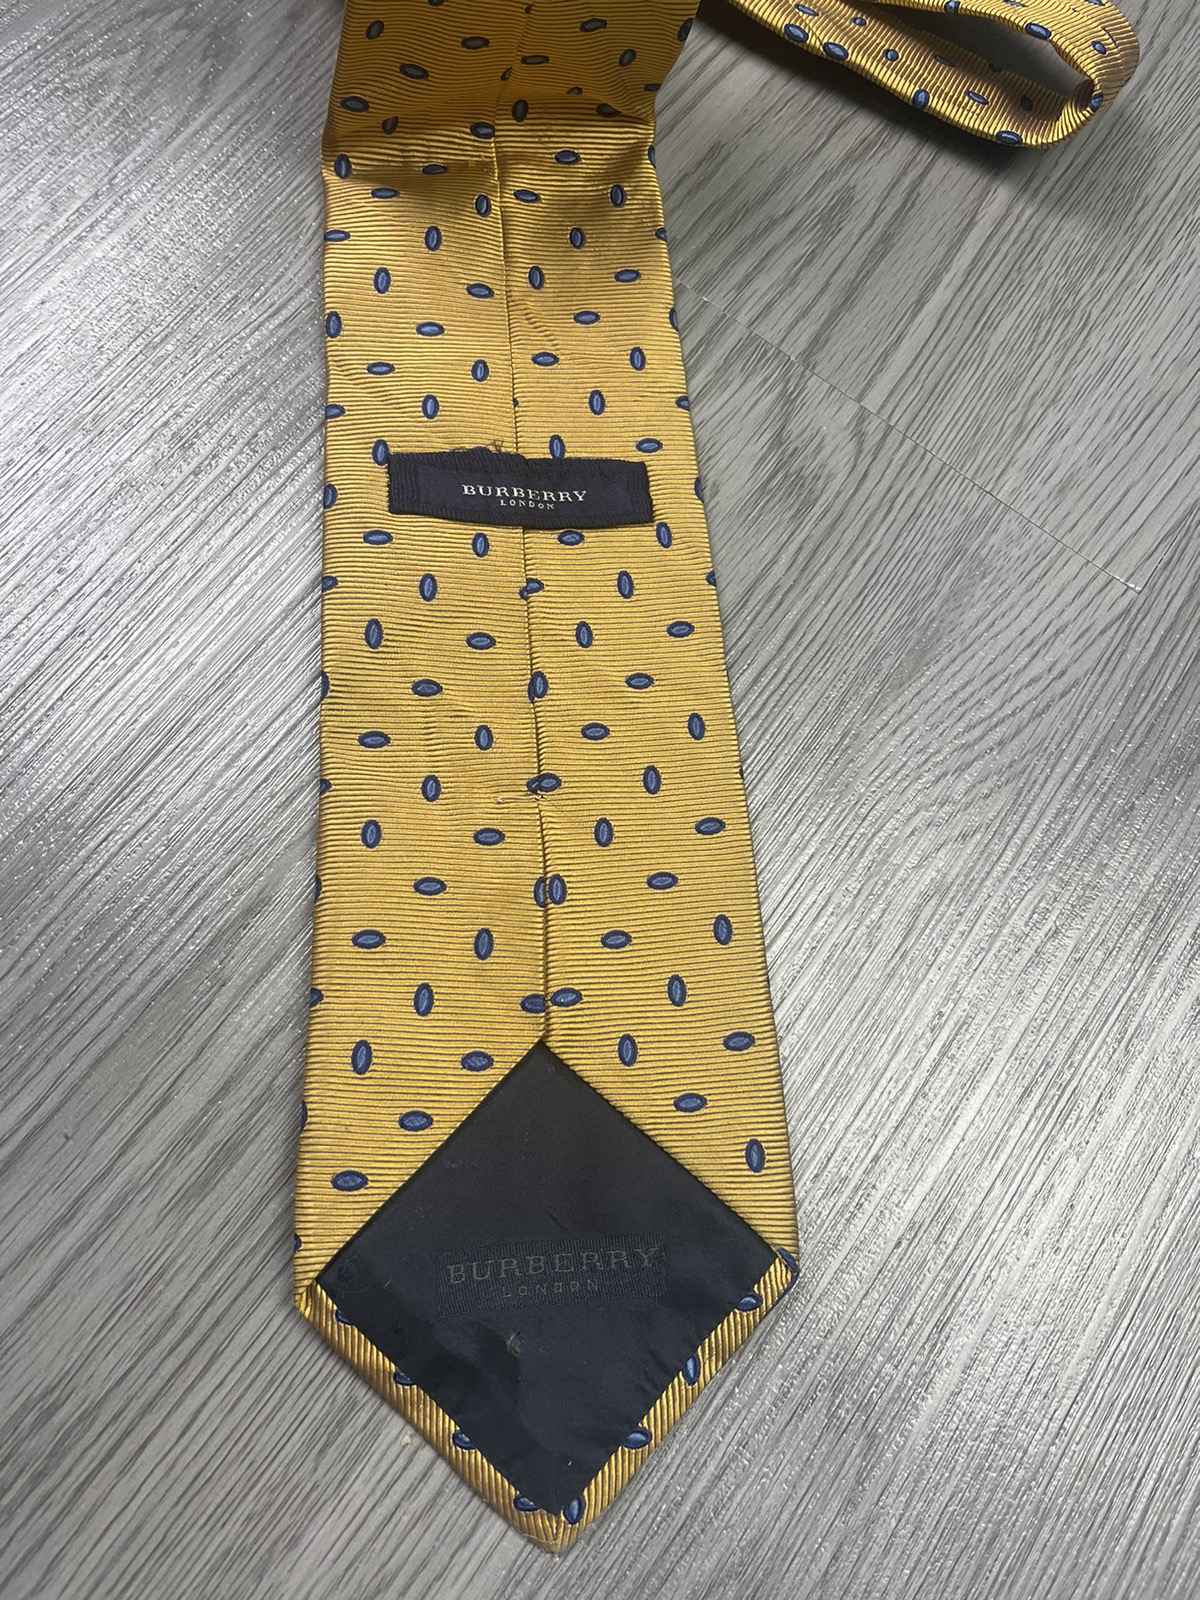 Burberry London Silk Formal & Casual Neckties - 5